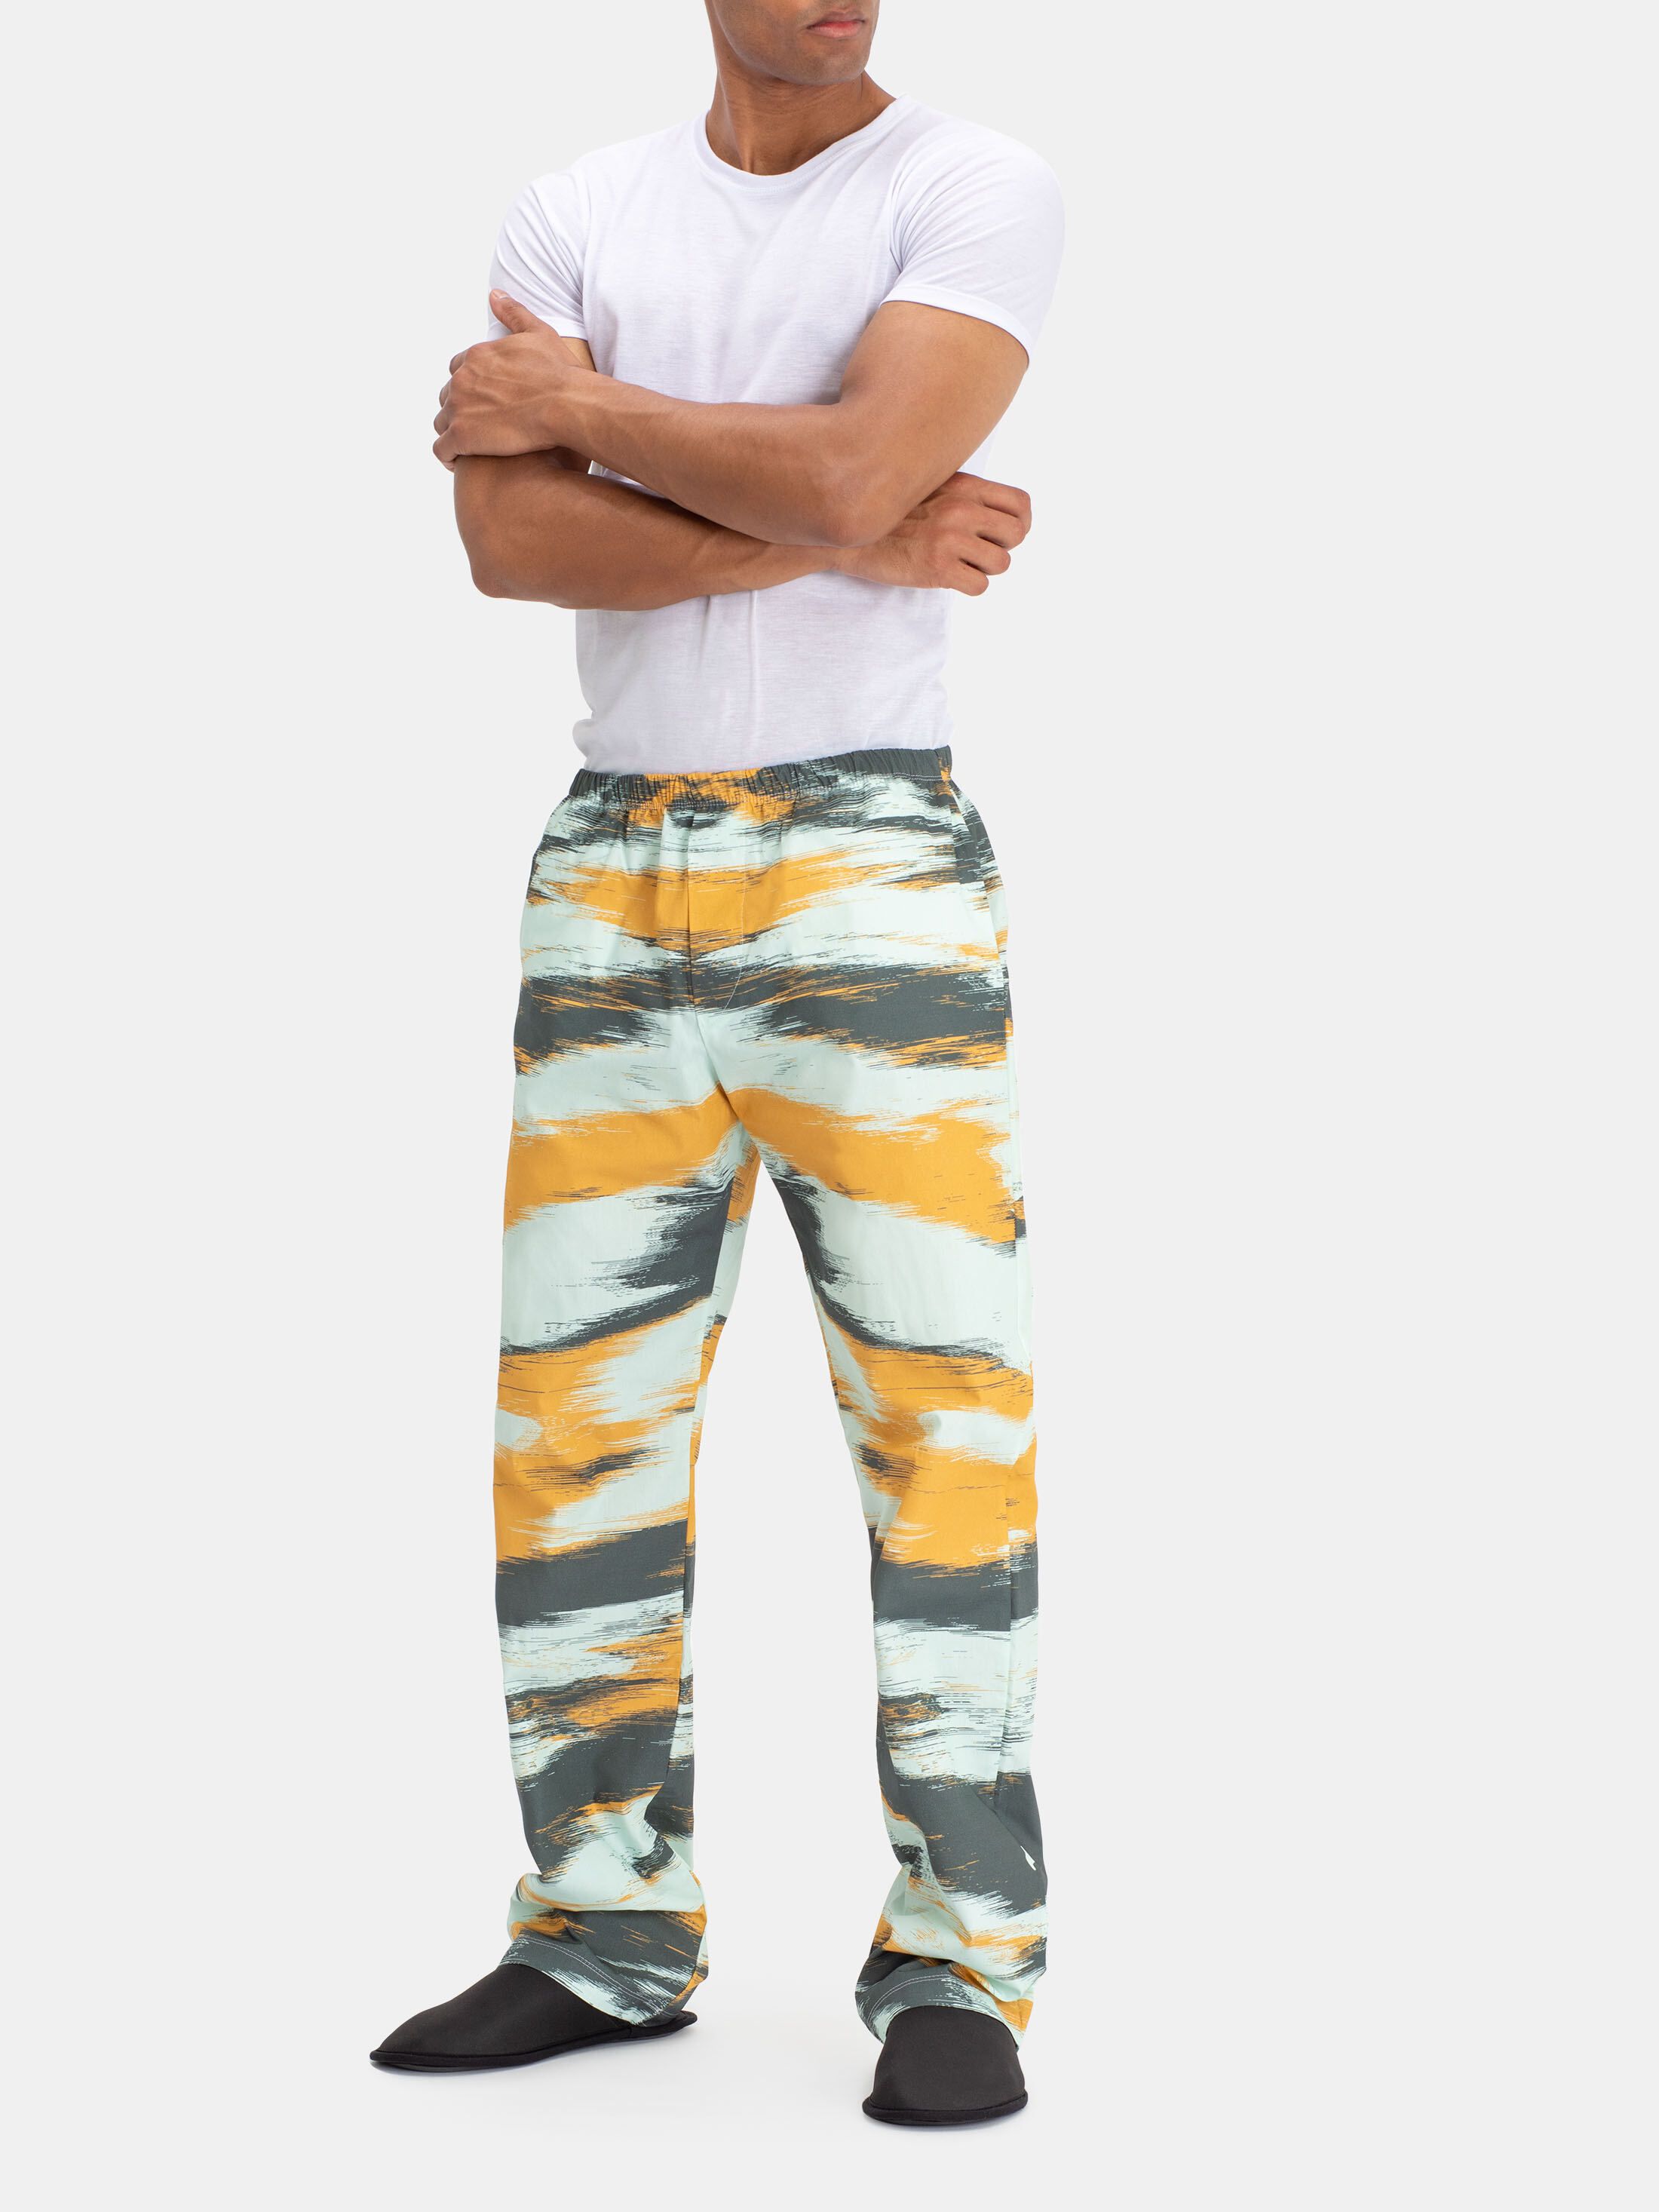 Create Personalized Pajama Pants